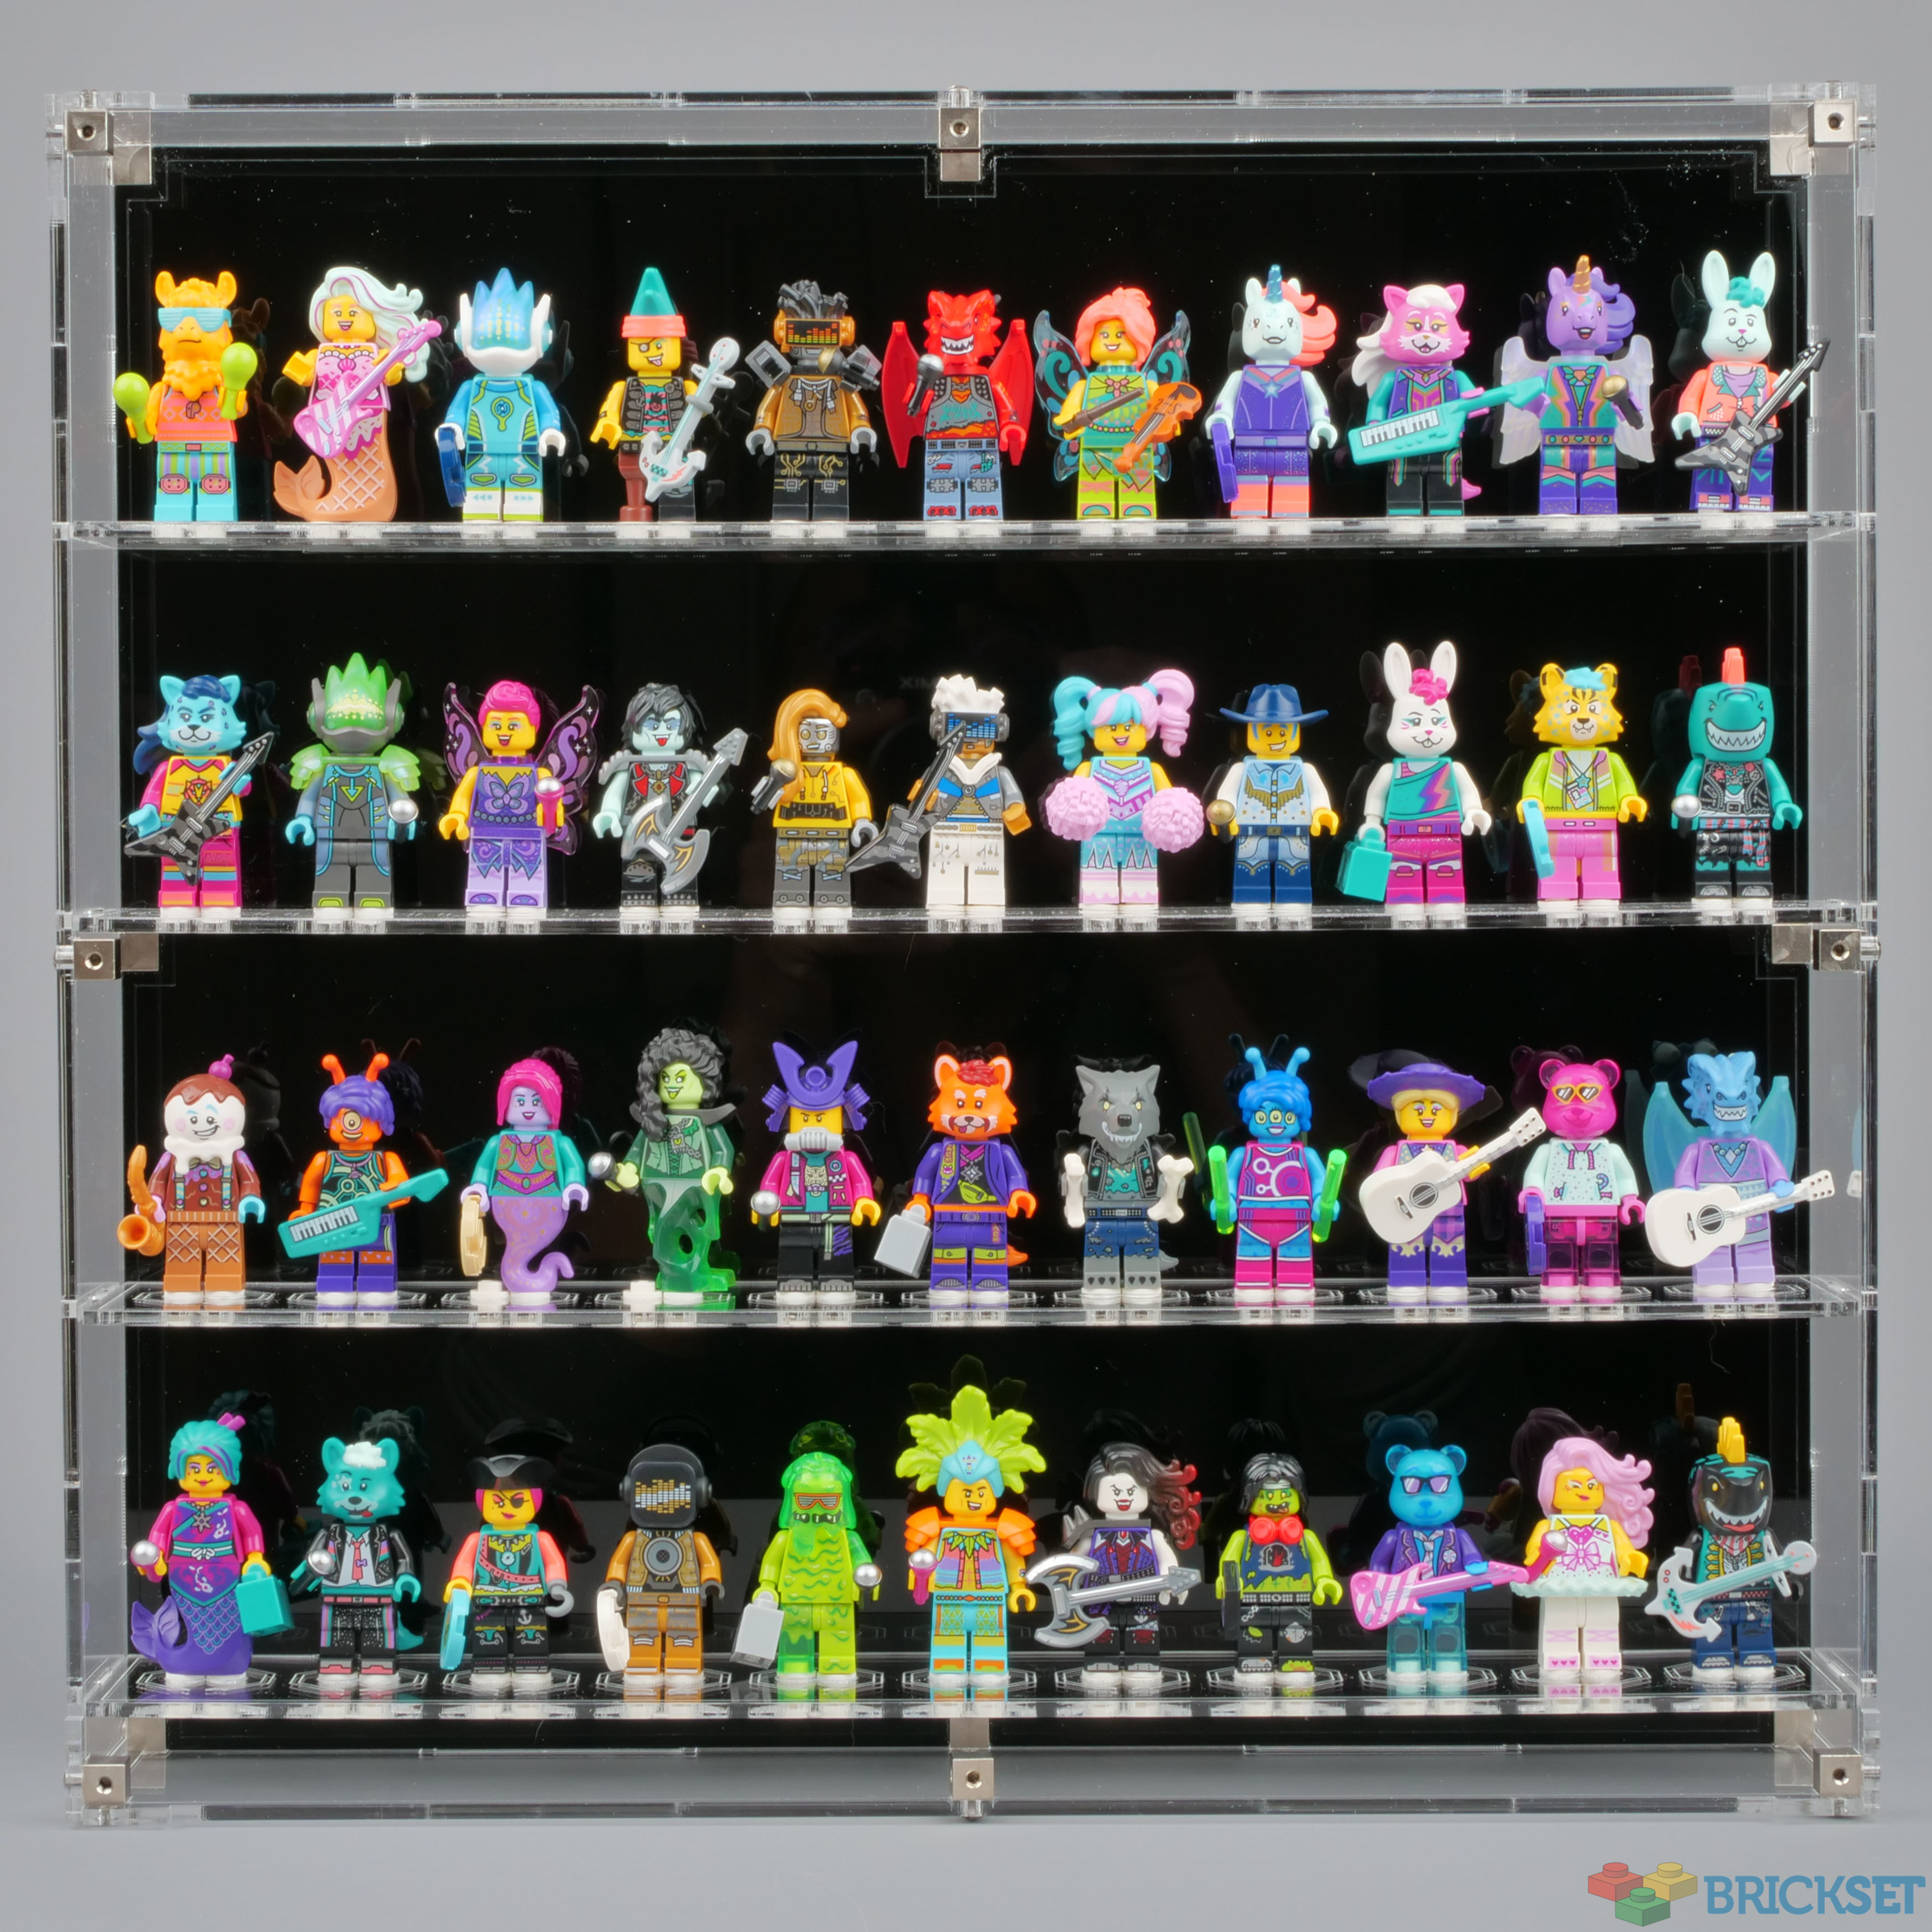 60 LEGO Minifigures Desktop Display Case